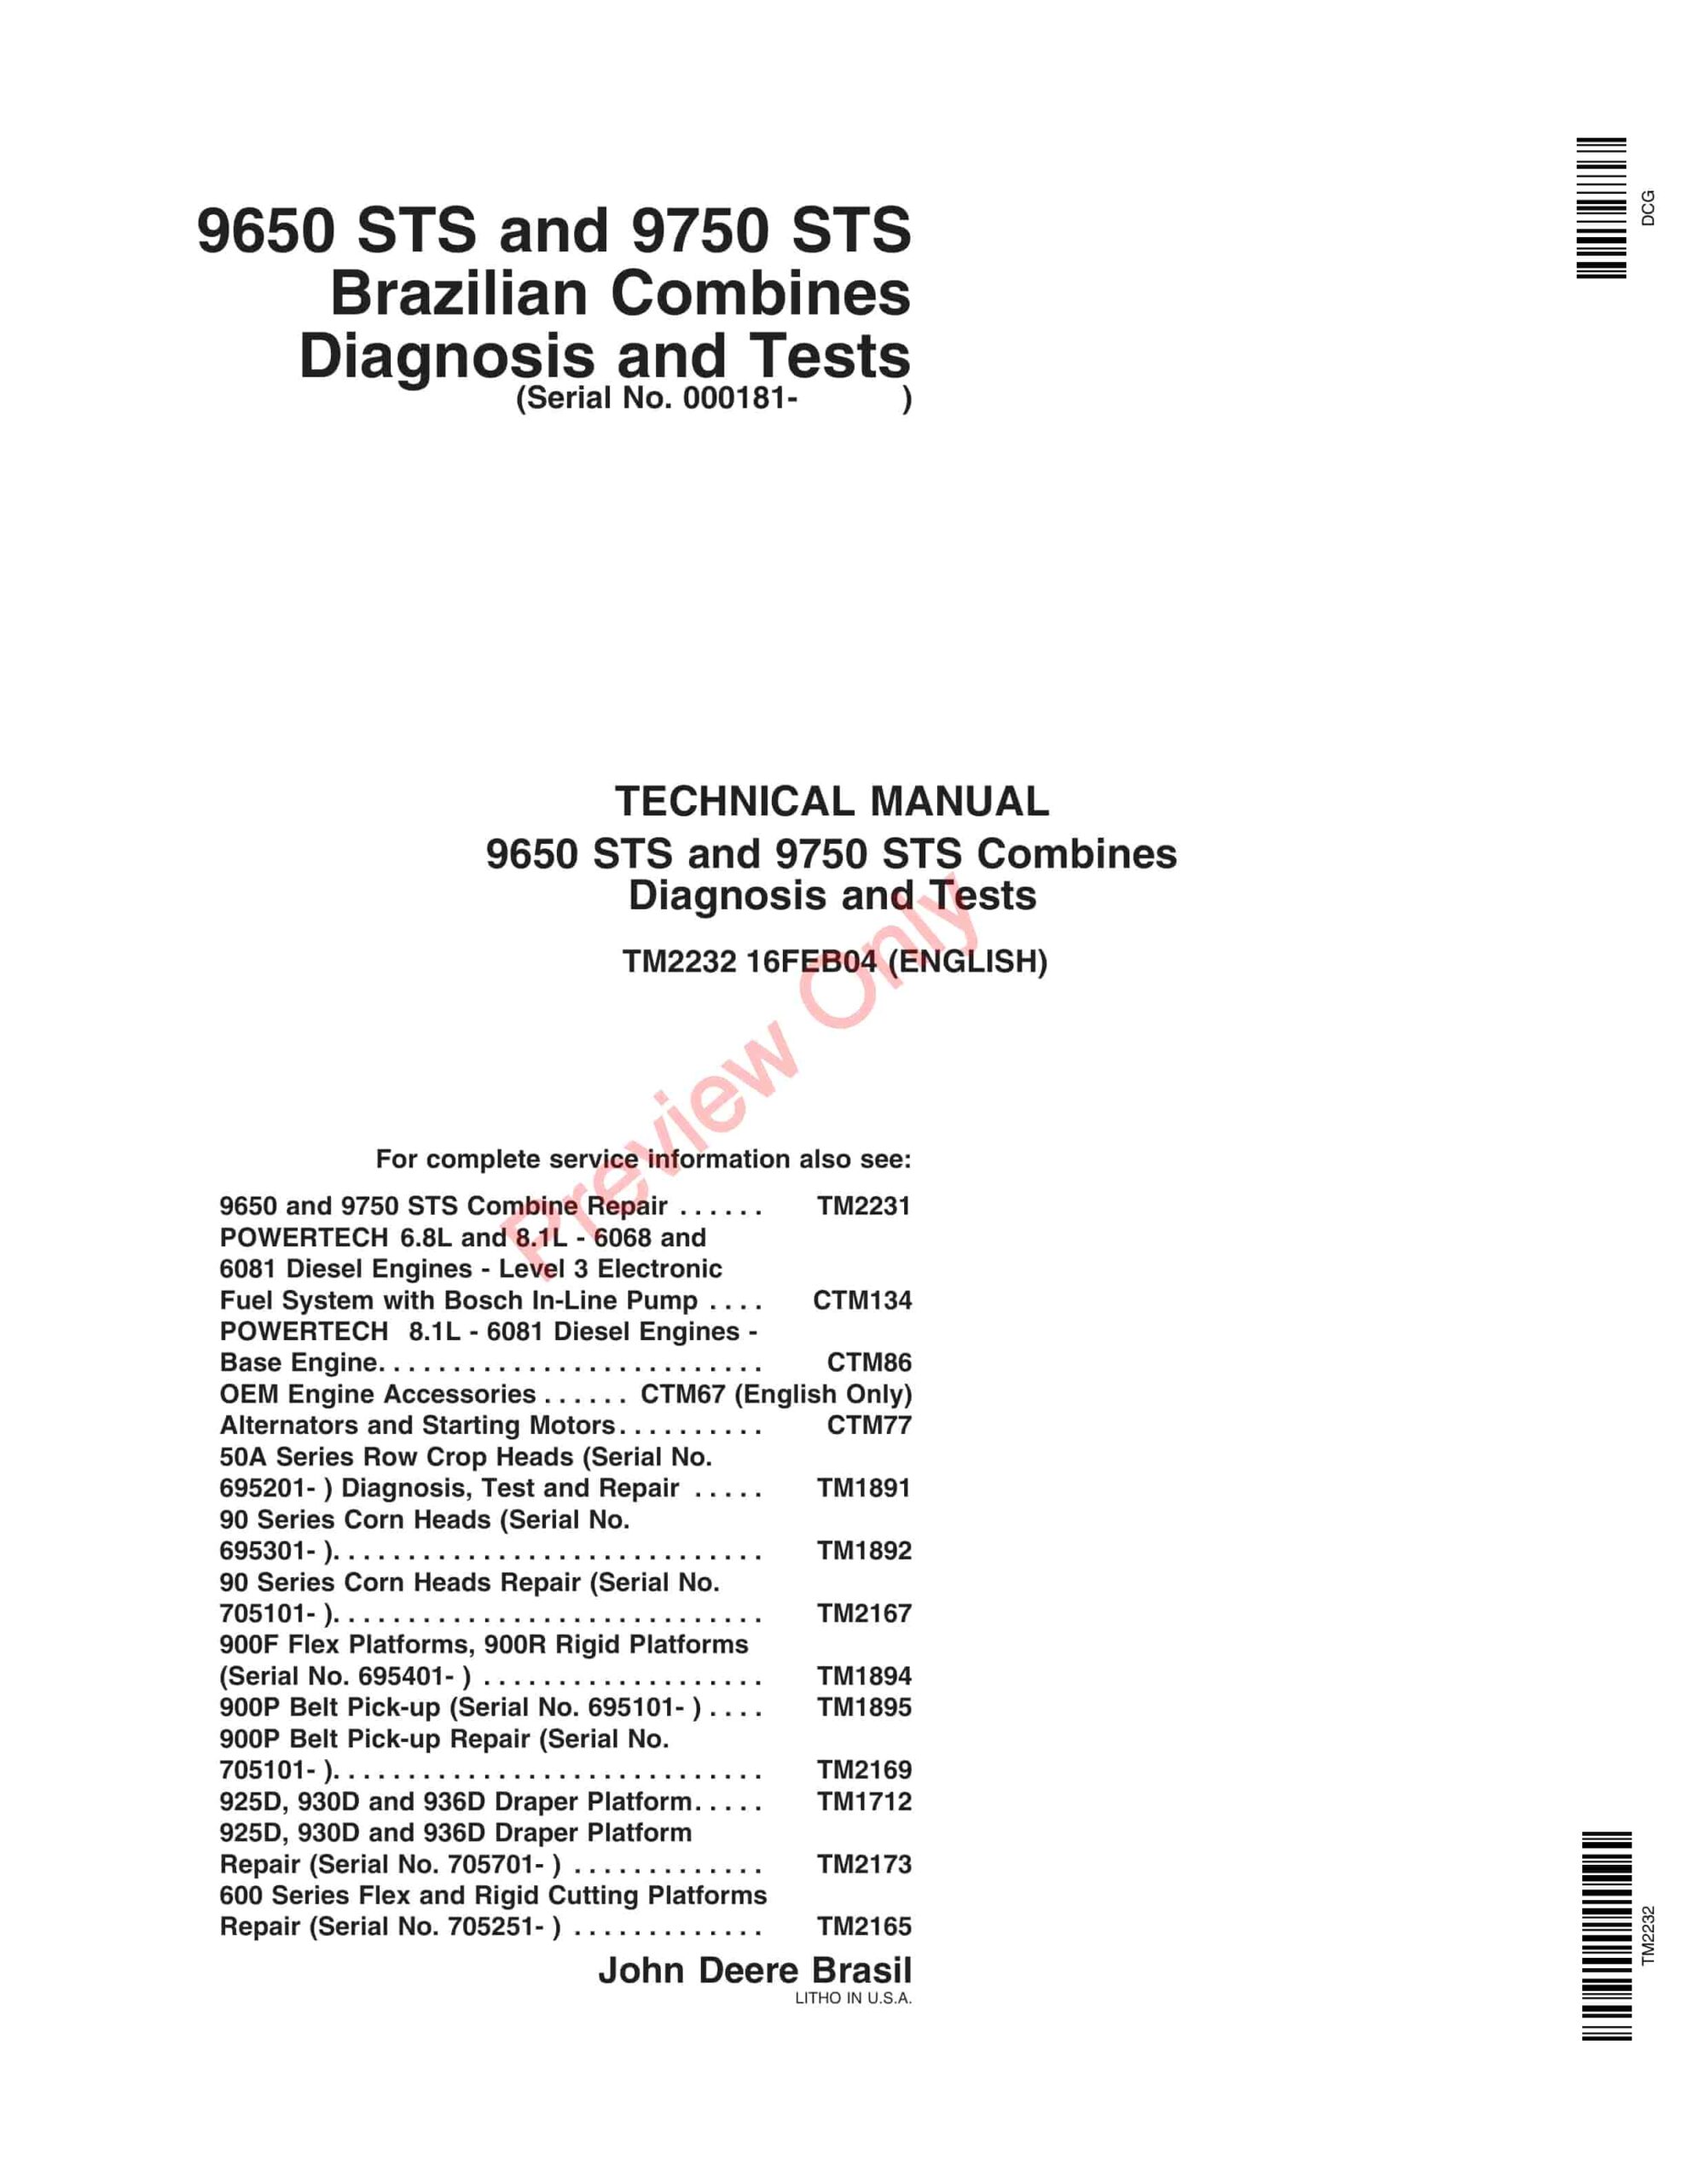 John Deere 9650 STS, 9750 STS Brazilian Combines Technical Manual TM2232 16FEB04-1